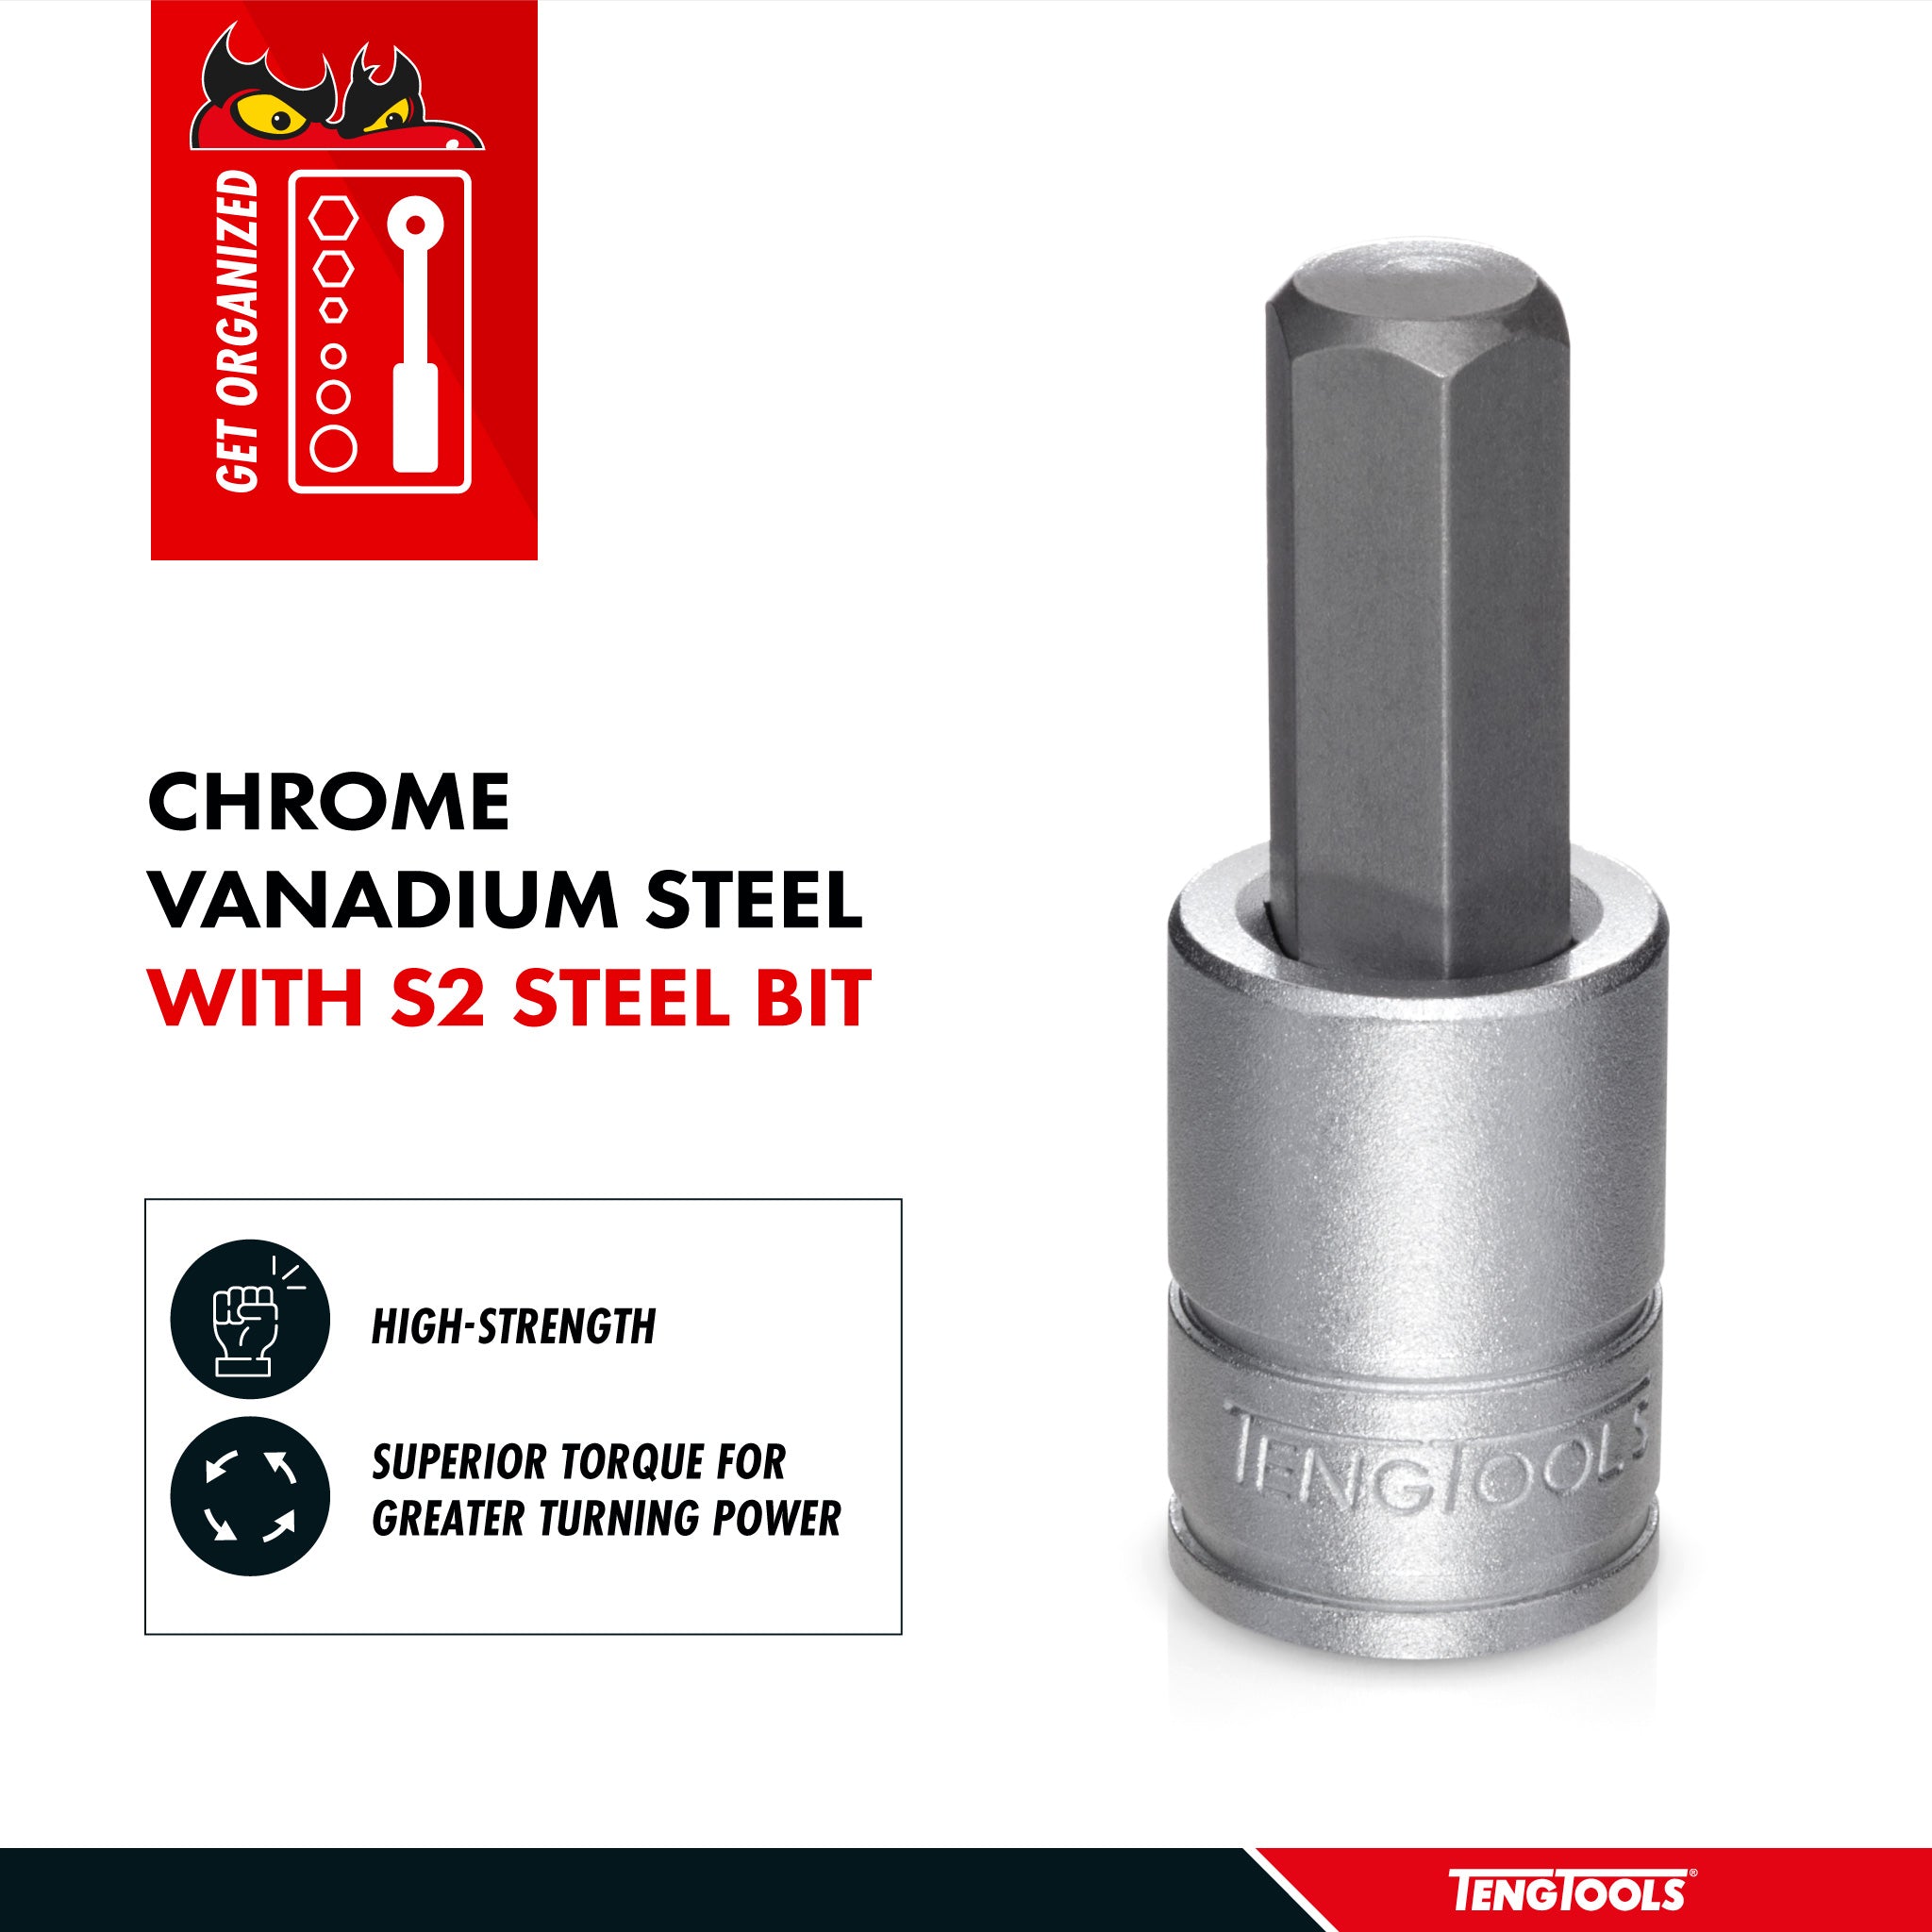 Teng Tools 3/8 Inch Drive Metric Hex Chrome Vanadium Sockets